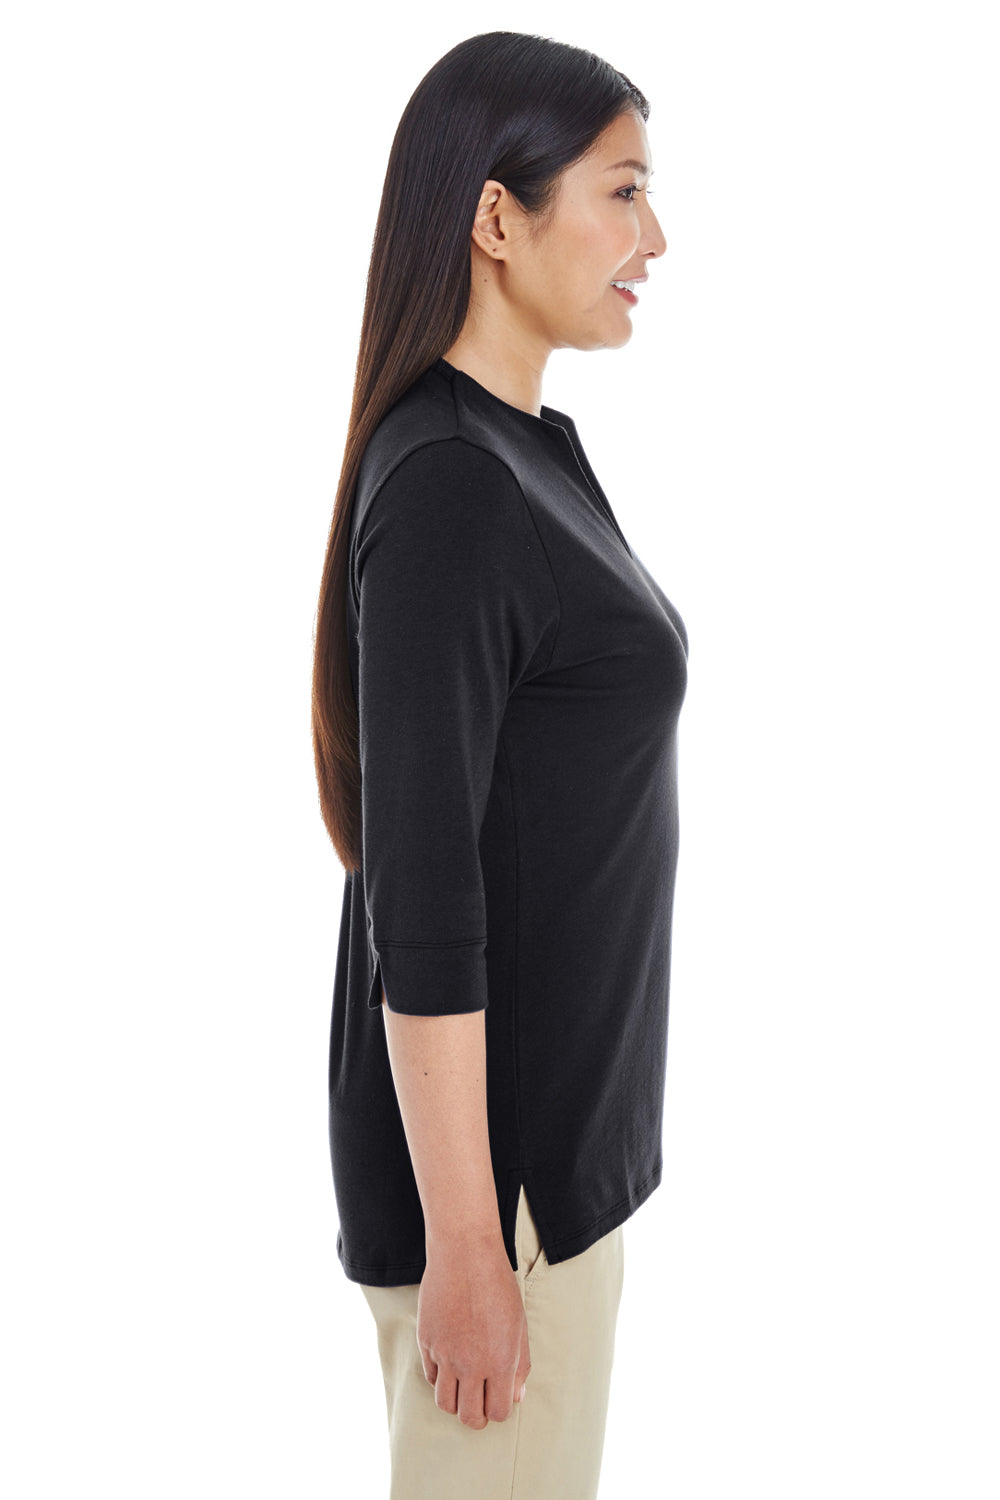 Devon & Jones DP188W Womens Perfect Fit 3/4 Sleeve Polo Shirt Black Side